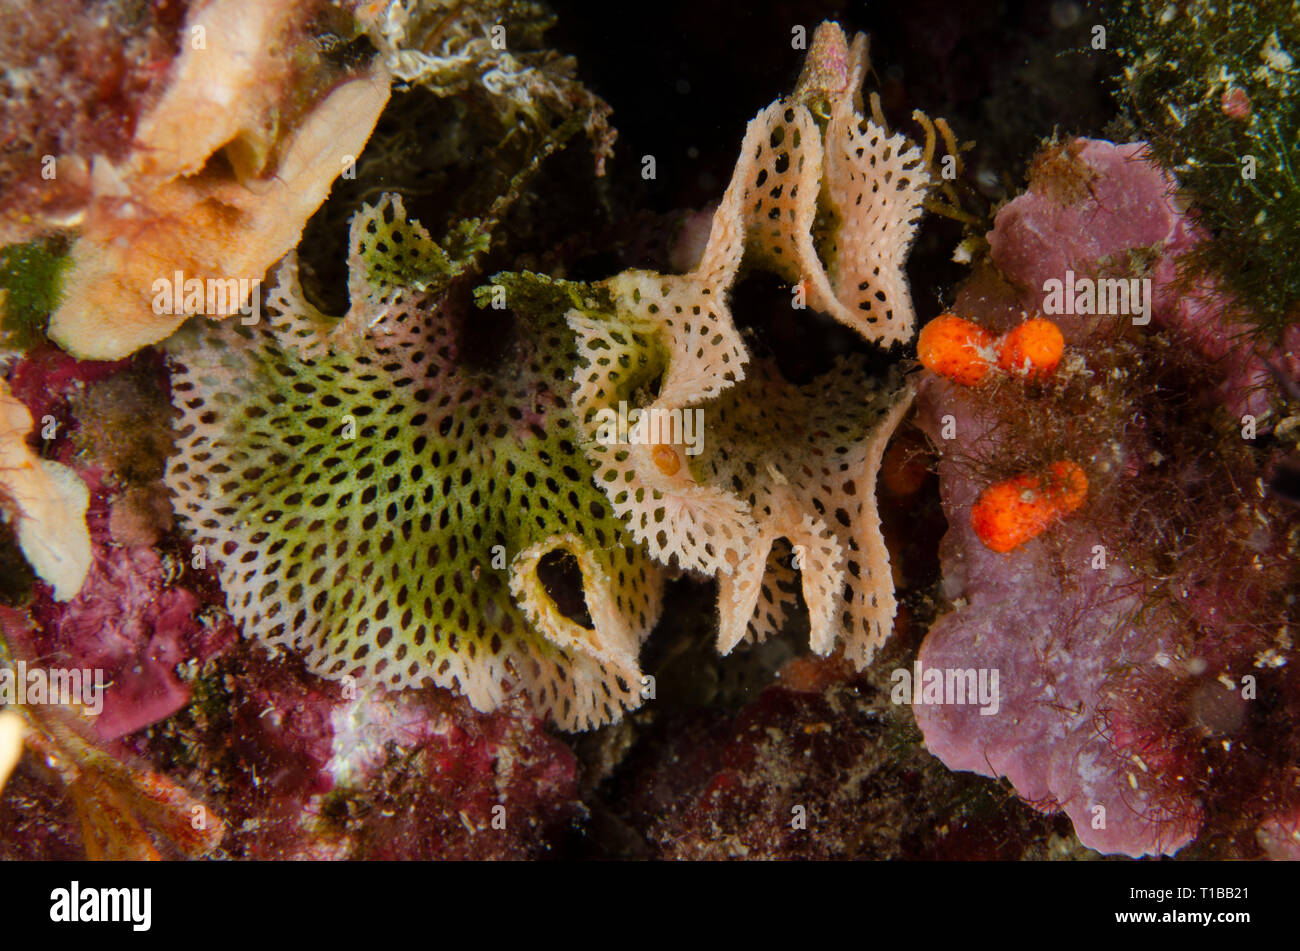 Bryozoan Reteporella grimaldii, Synonimus Sertella septentrionalis, Phidoloporidae, Tor Paterno Marine Protected Area, Rome, Italy, Mediterranean Sea Stock Photo